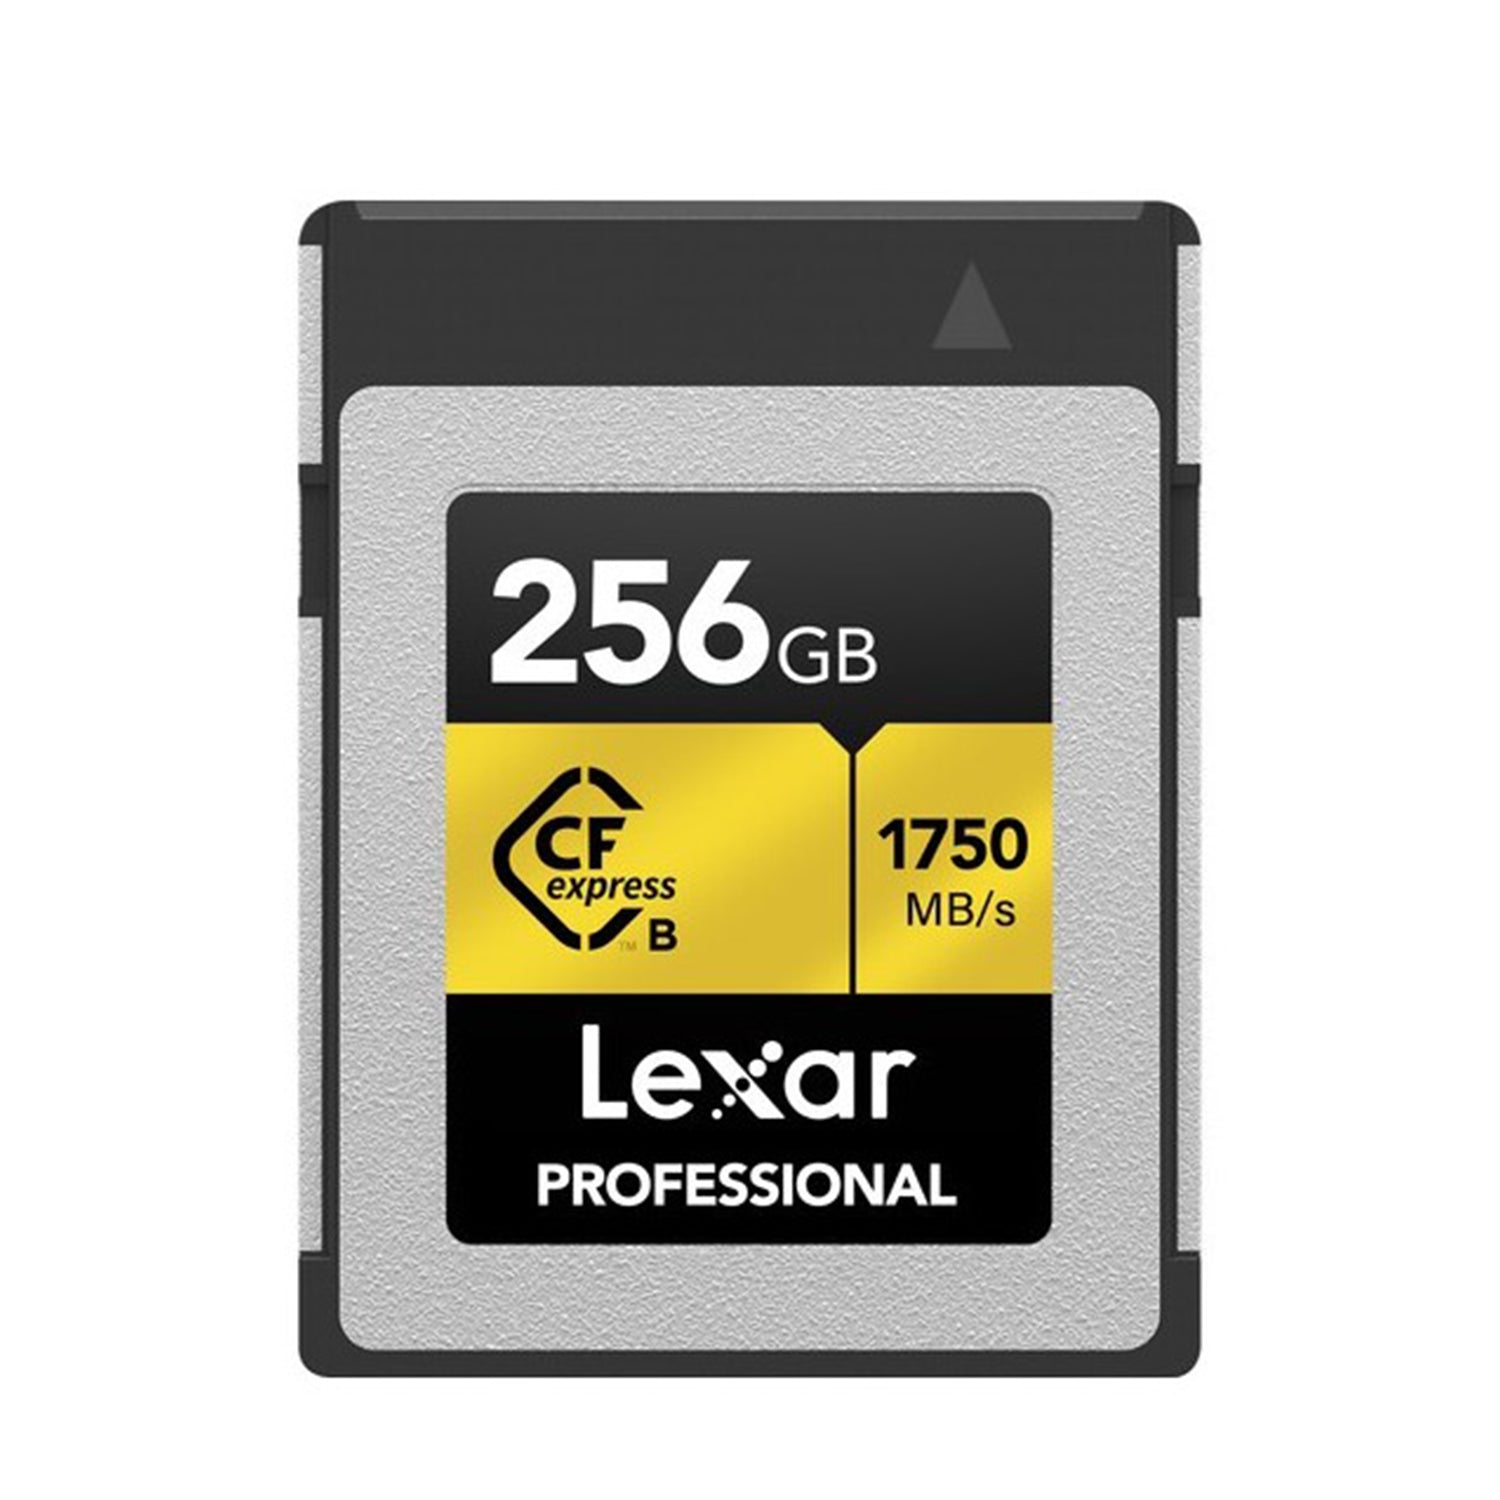 Lexar CFEXPRESS type-B 256GB Gold Hispeed - Cine Sud è da 47 anni sul mercato! 933033